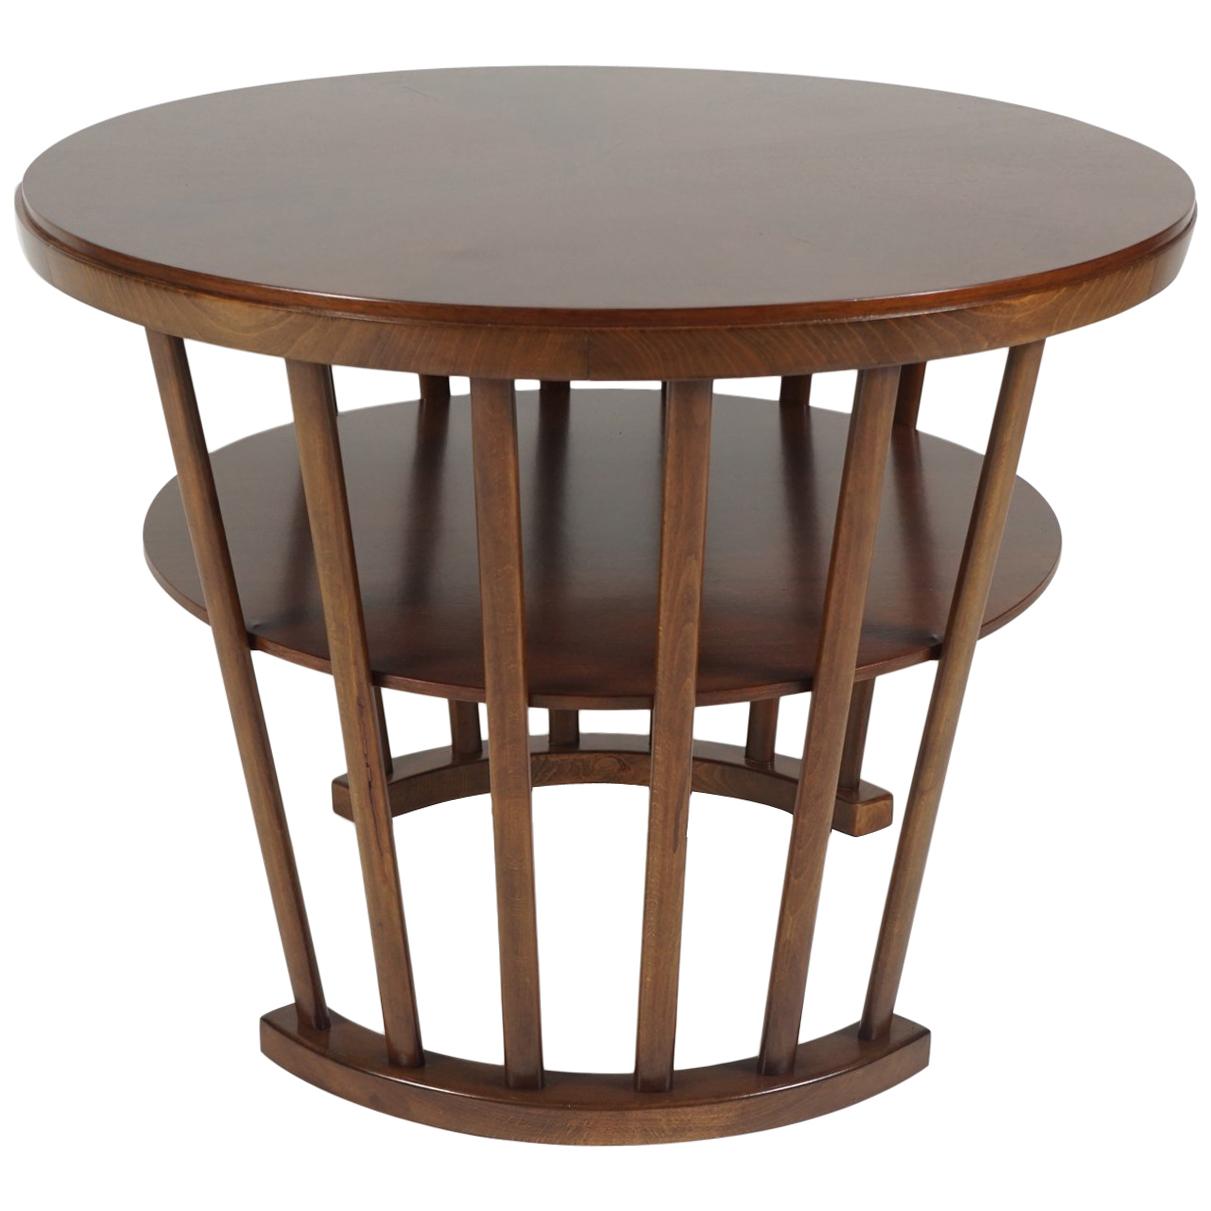 Unique Danish Modern Side Table